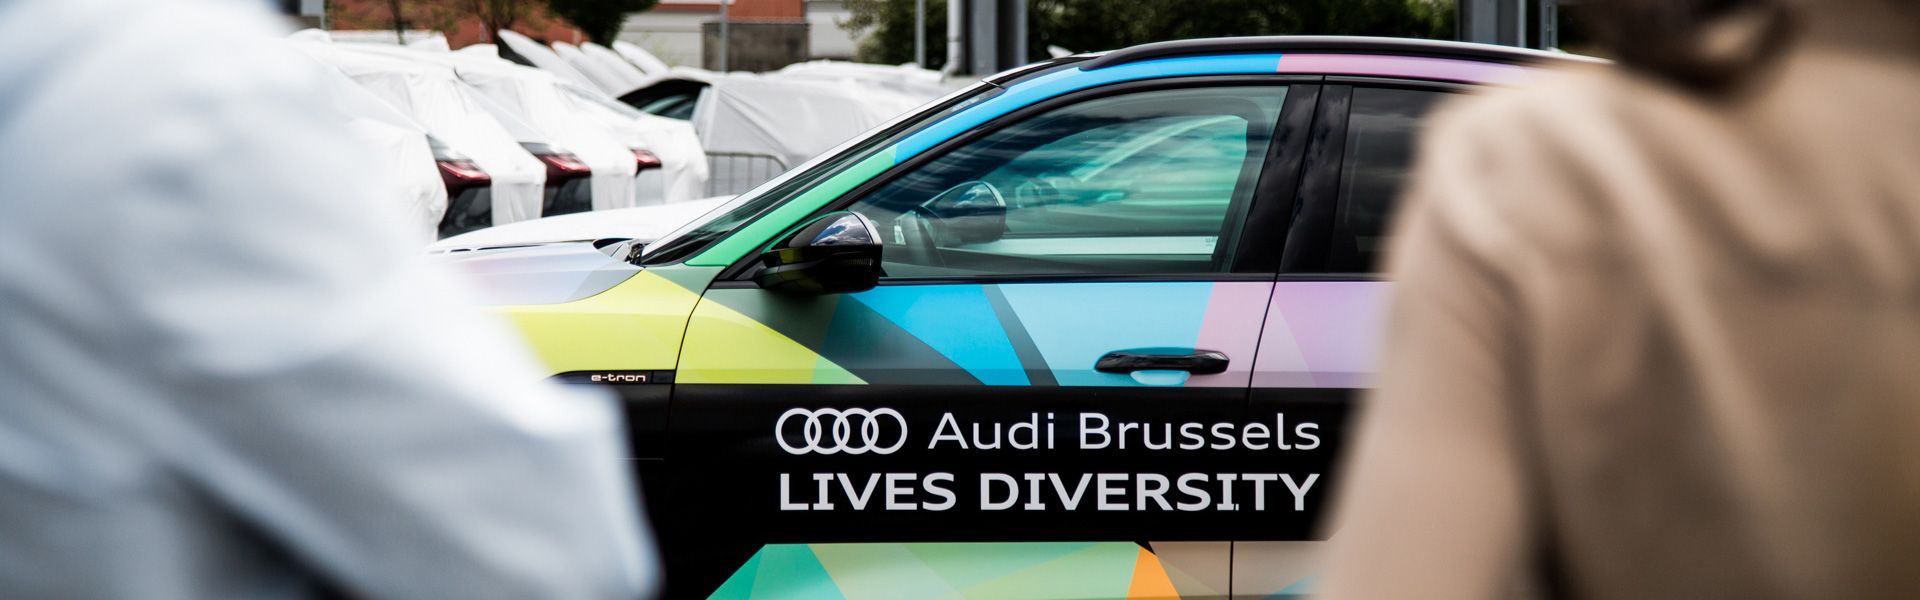 1920x600_Audi-Brussels_Diversity-car-2021_LR-5.jpg